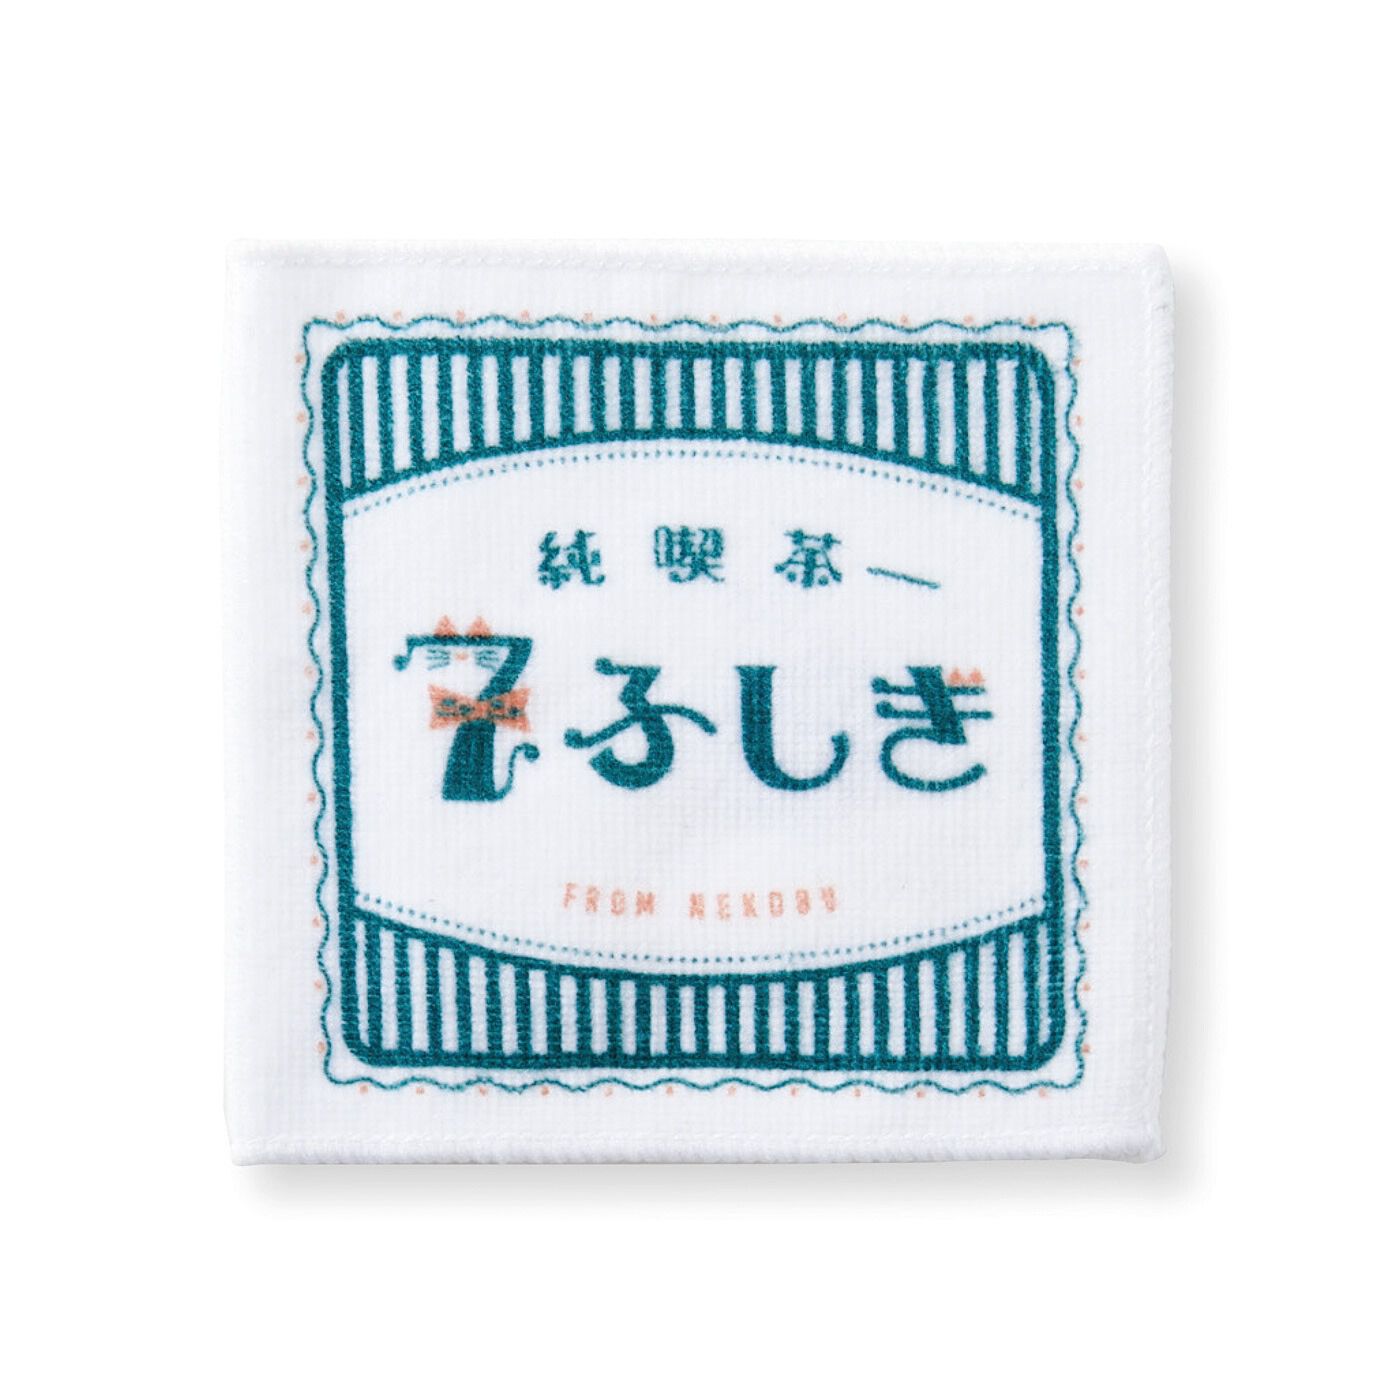 Real Stock|純喫茶７ふしぎ from NEKOBU　ポケット付きコースター風ハンカチ|〈1. オアシスグリーン〉